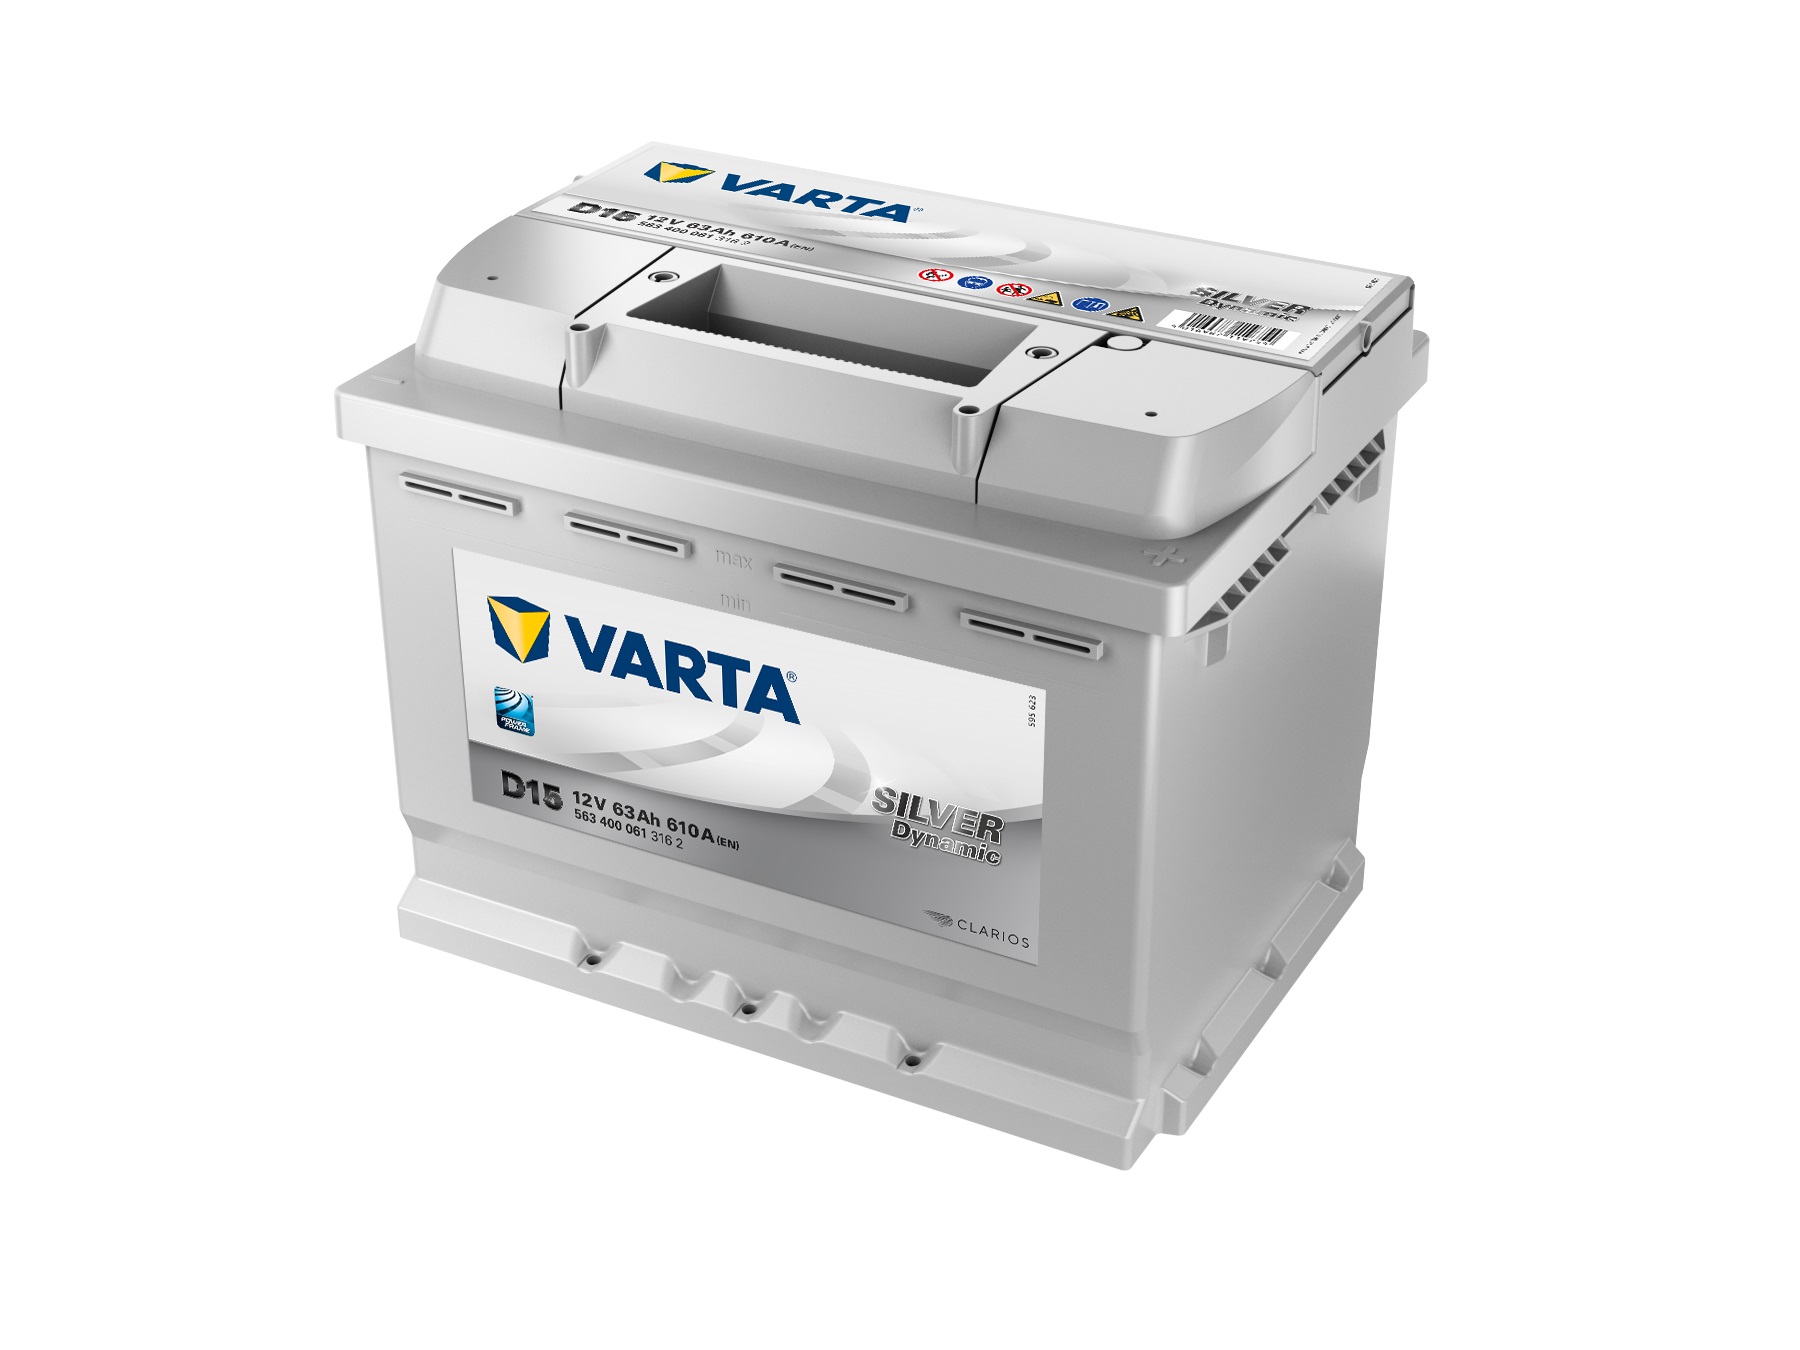 VARTA Silver Dynamic Autobatterie, D15, 63 Ah, 610 A von Varta